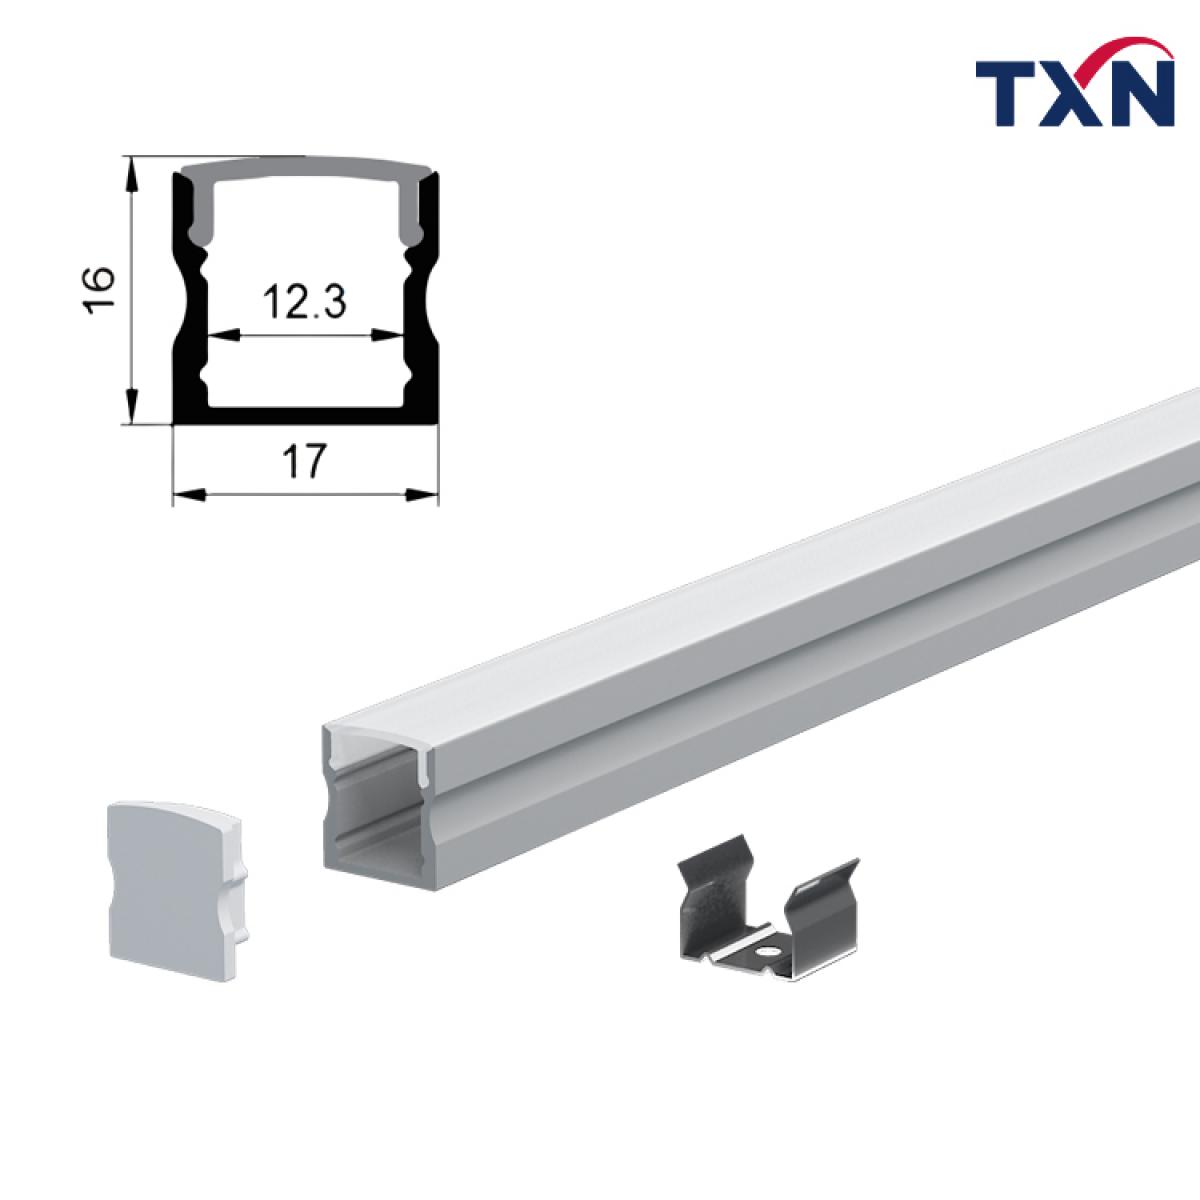 TXN-1715 Top Quality LED Aluminium Profiles From Shenzhen TXN LED Lighting